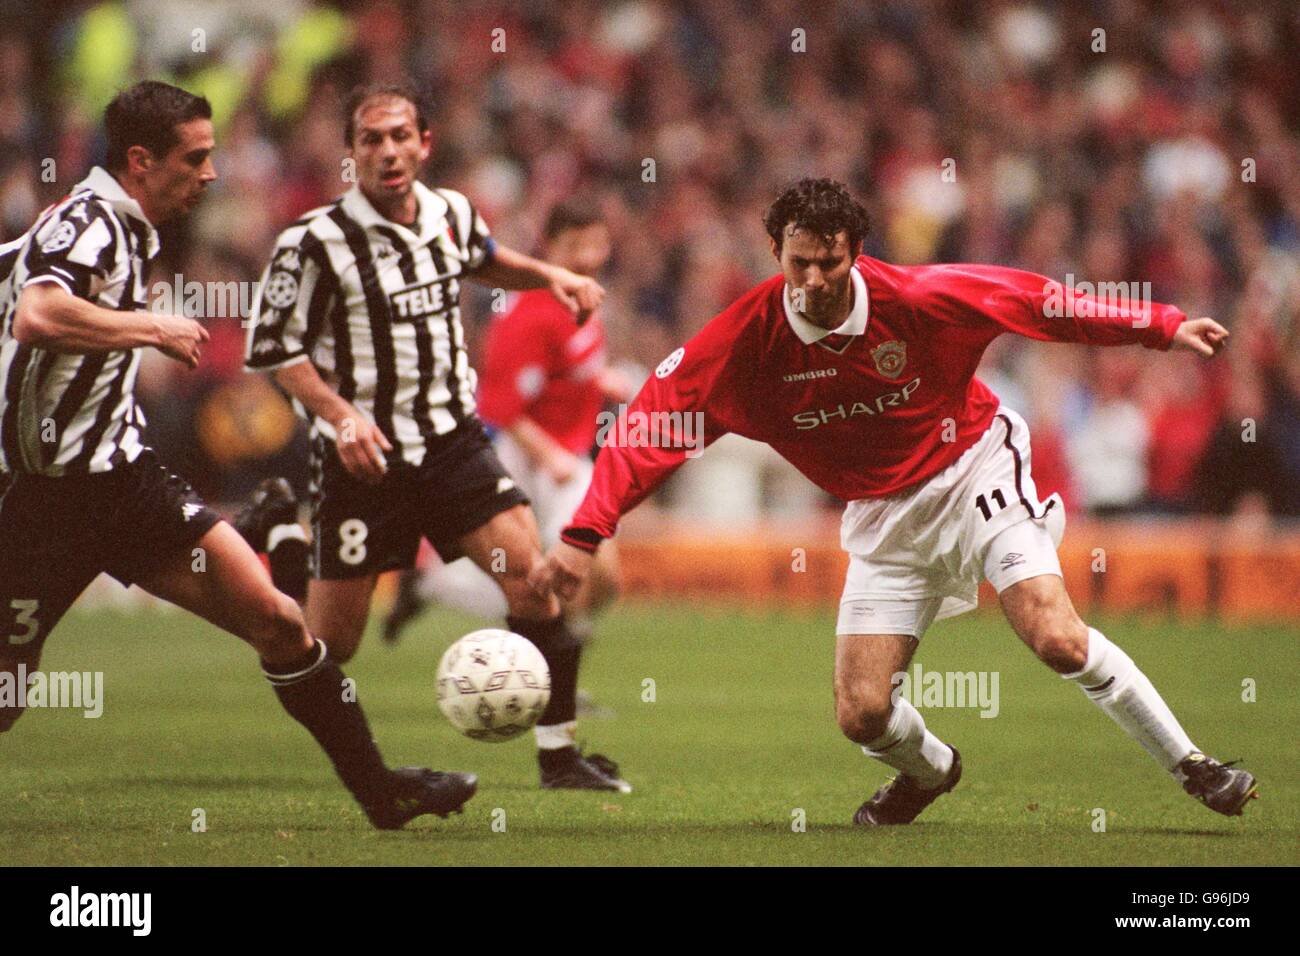 Manchester United's Ryan Giggs (right) takes on Juventus's Zoran Mirkovic (left) Stock Photo